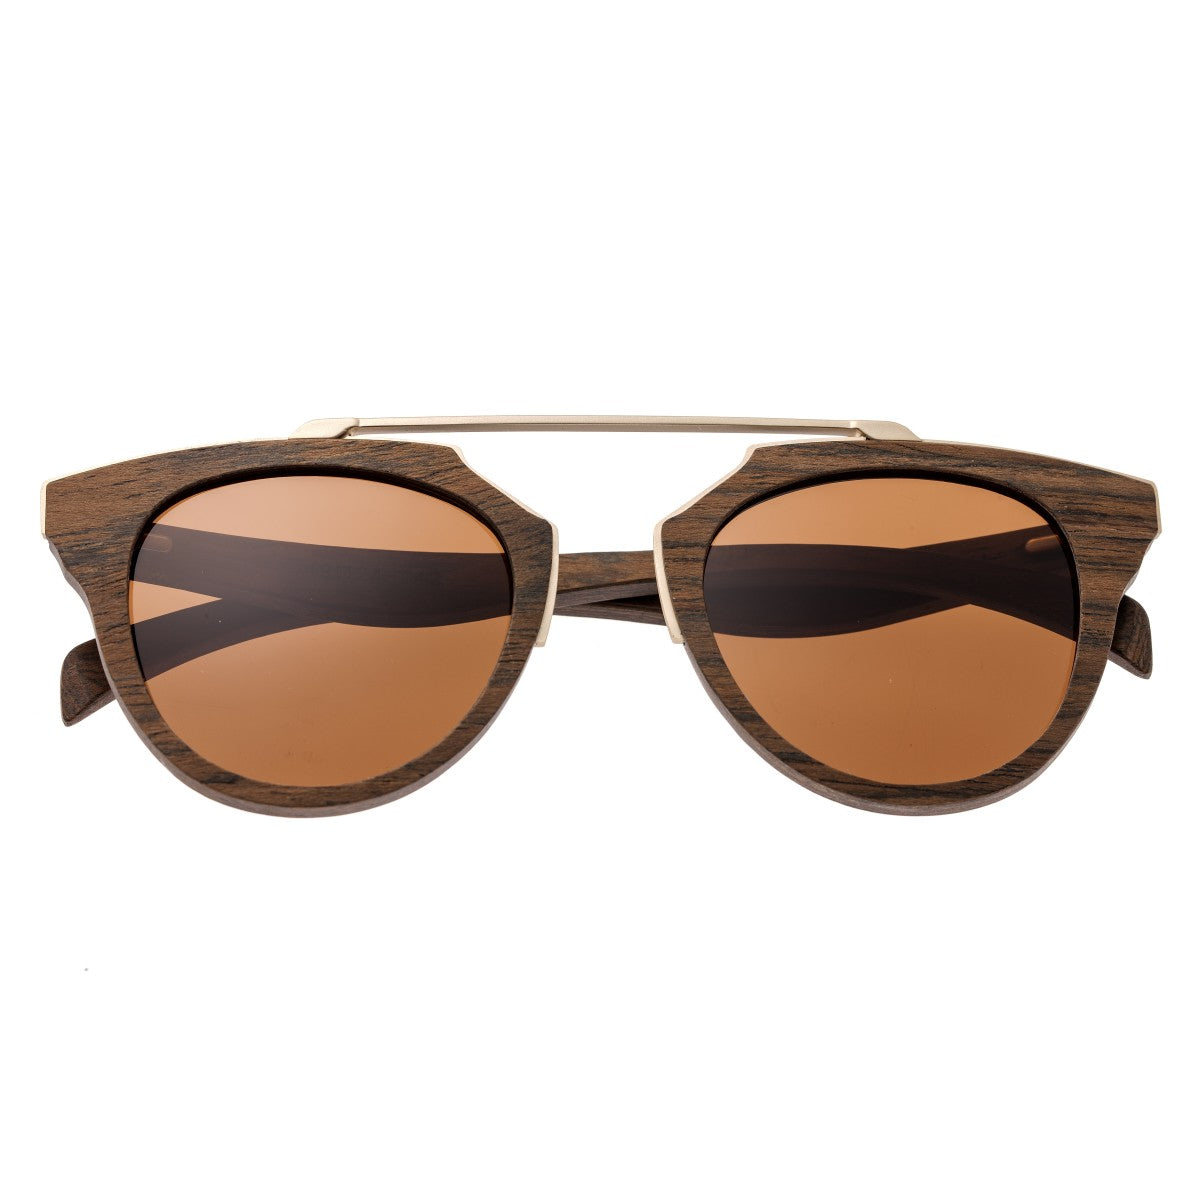 Earth Wood Ceira Polarized Sunglasses - Brown/Brown - ESG021BN